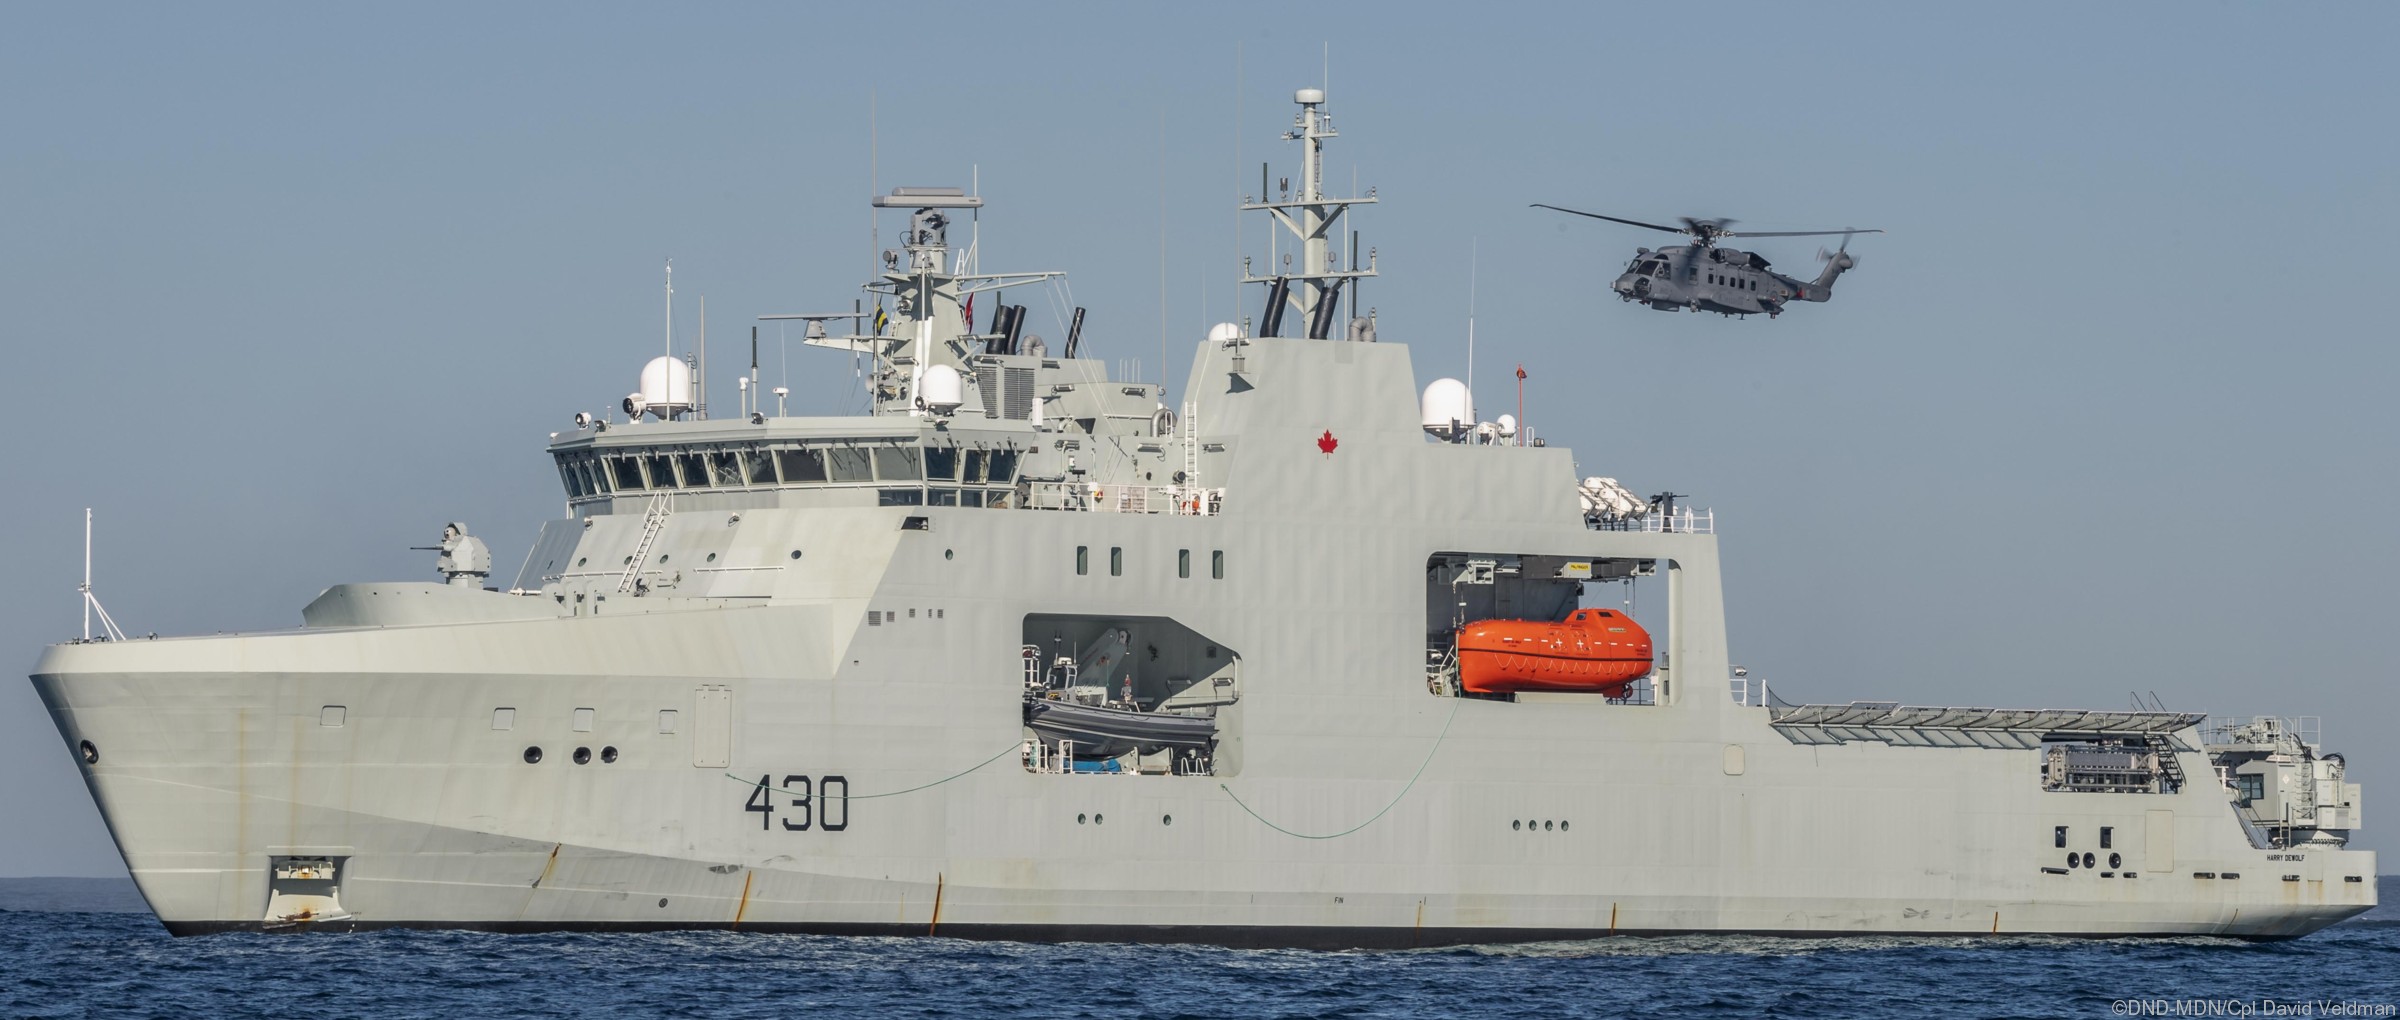 aopv-430 hmcs harry dewolf arctic offshore patrol vessel ncsm royal canadian navy 20